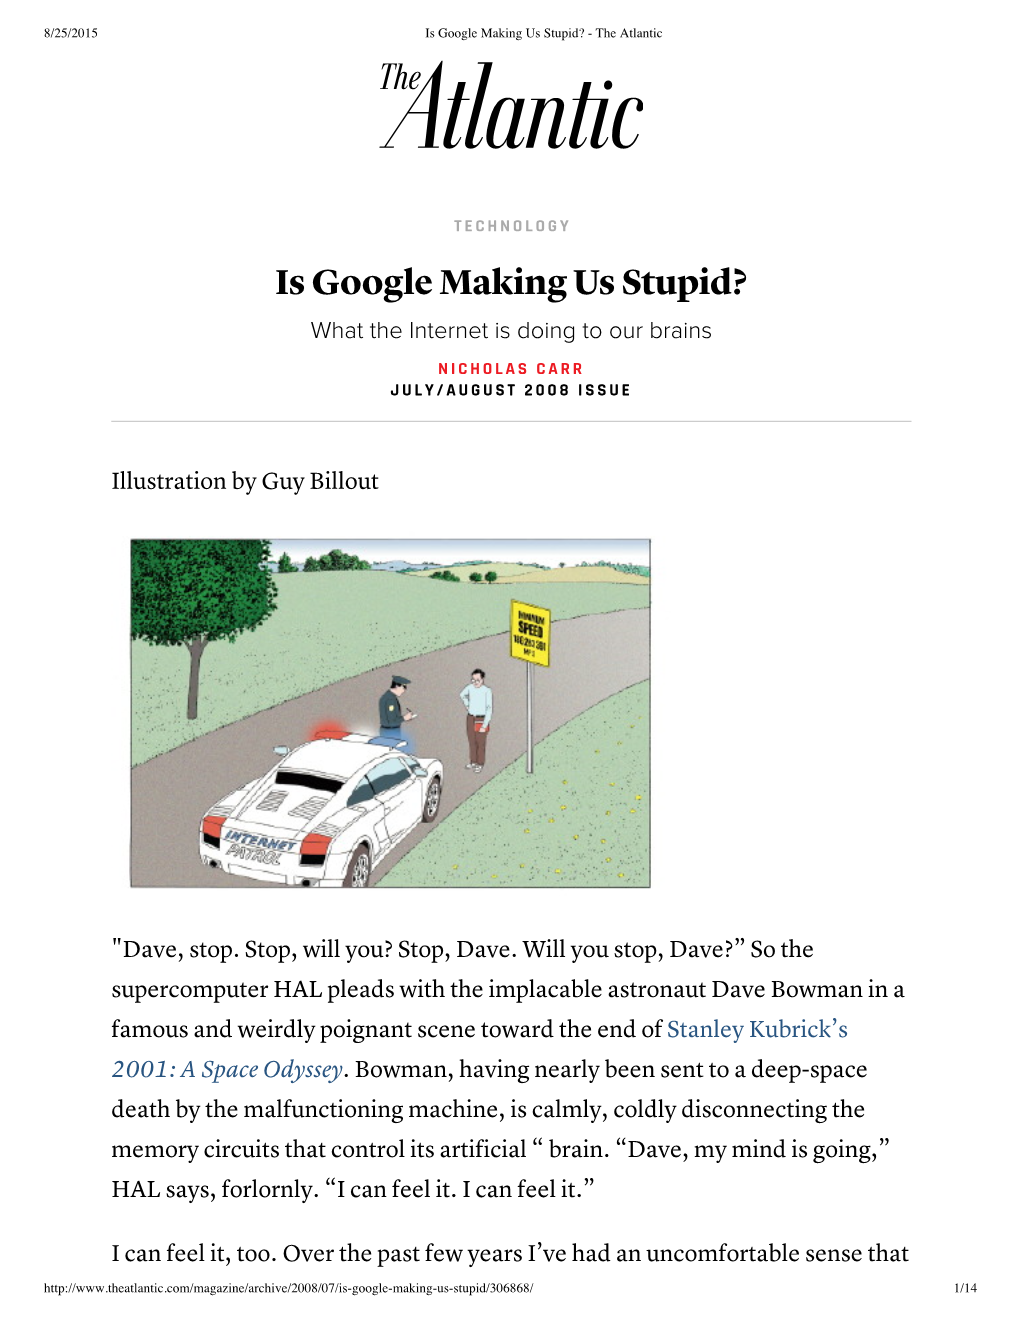 Is Google Making Us Stupid? - the Atlantic